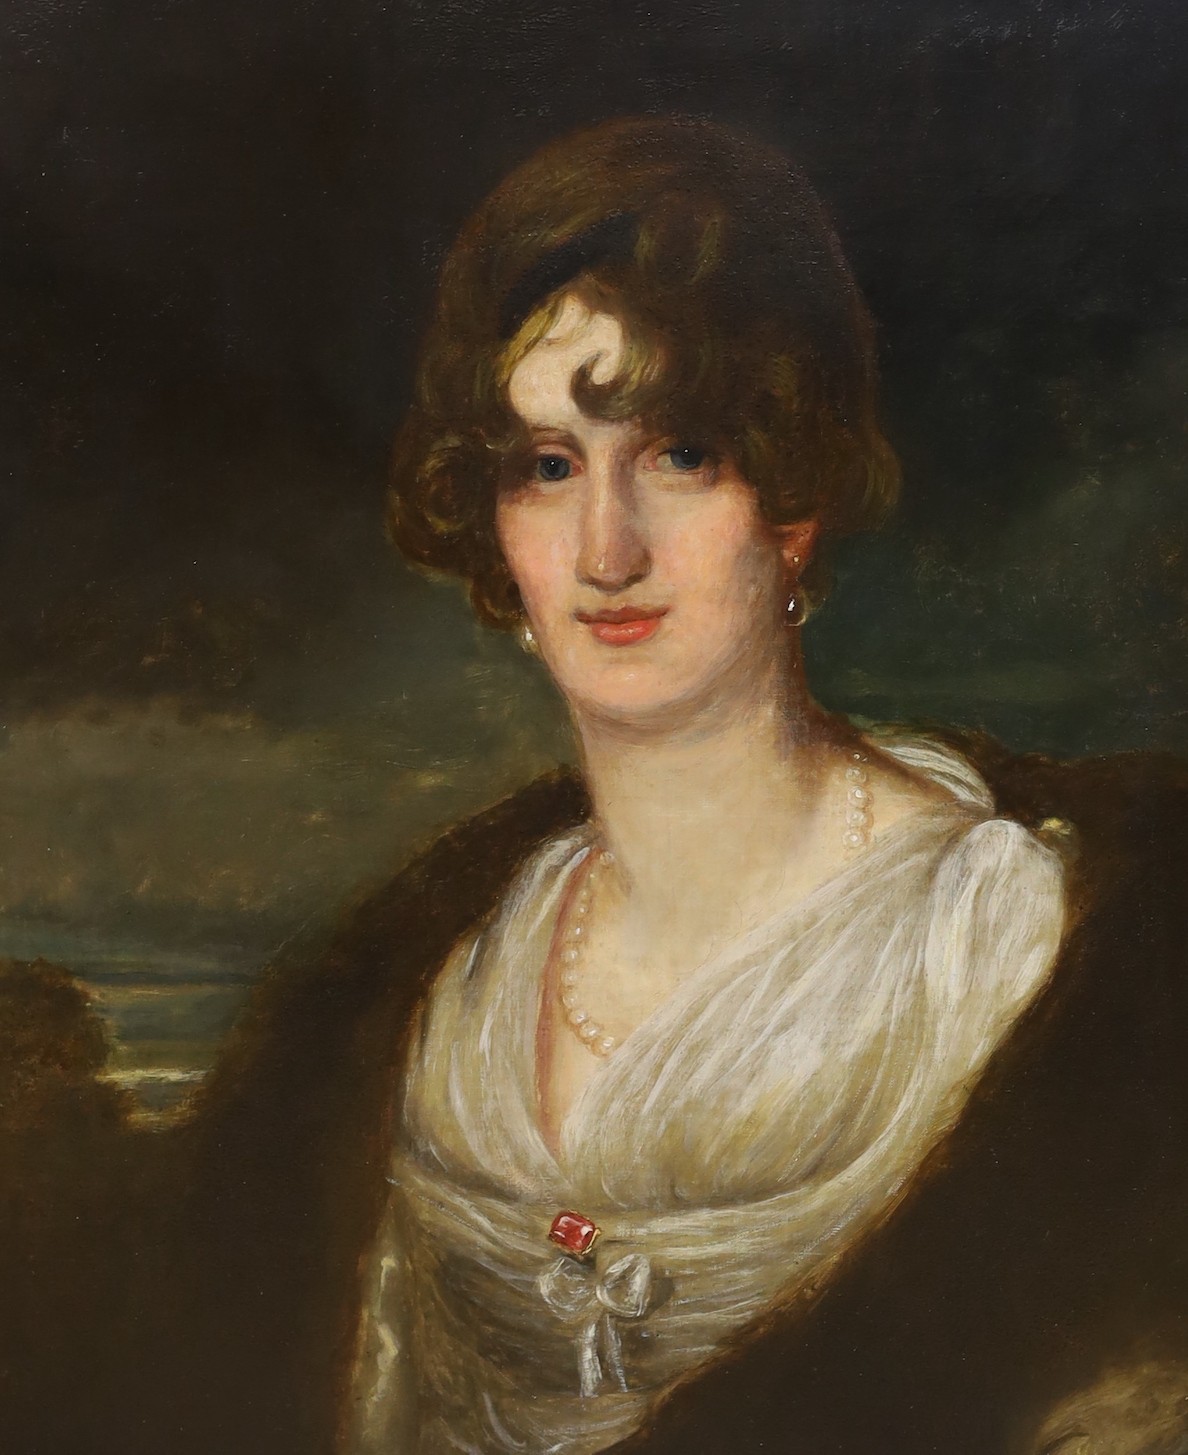 19th century English School, oil on canvas, Half length portrait of a lady, 71 x 59cm